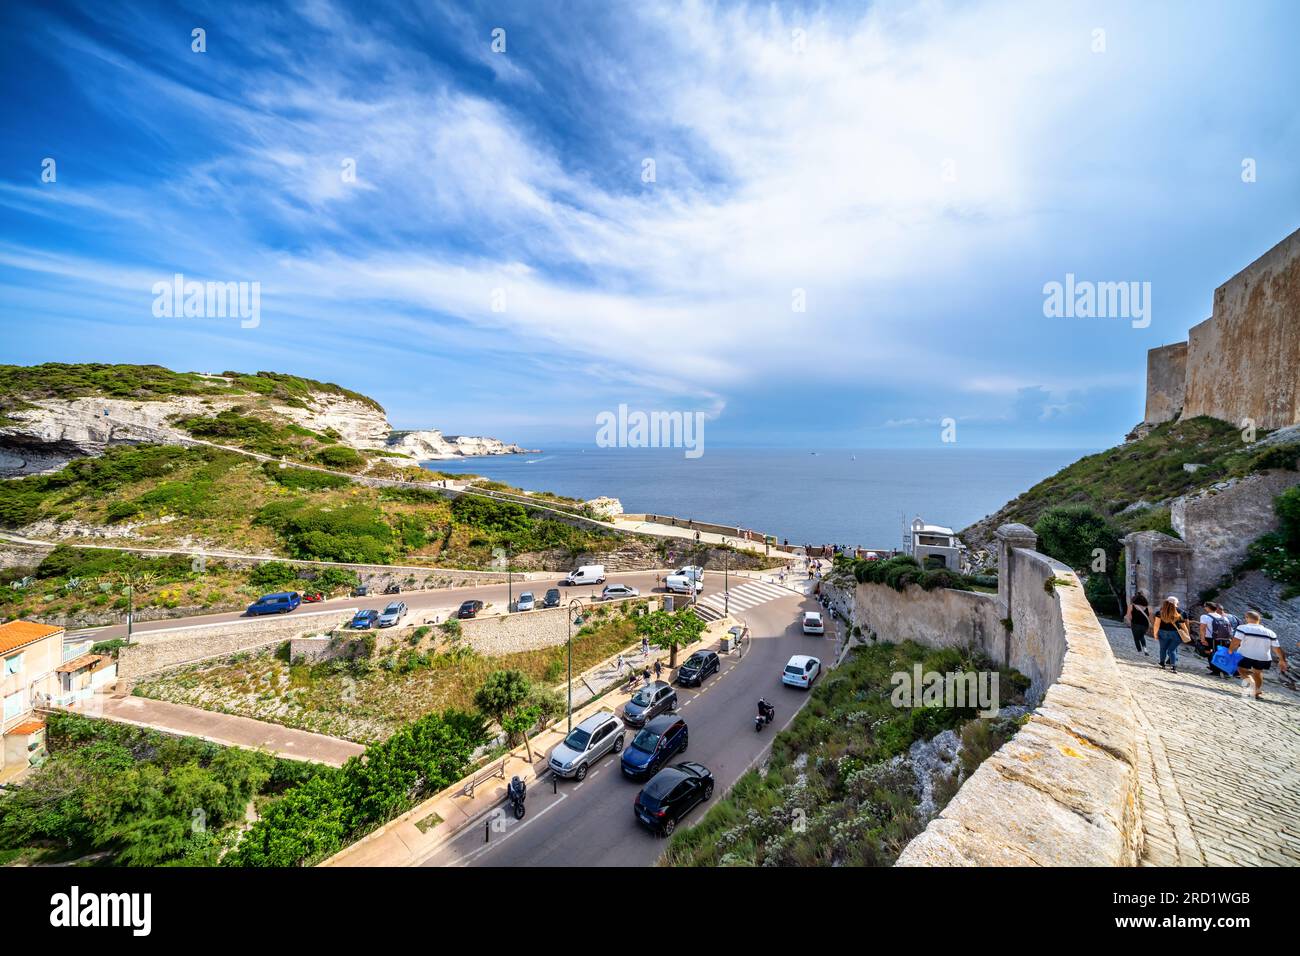 At Bonifacio, Corsica island, France Stock Photo